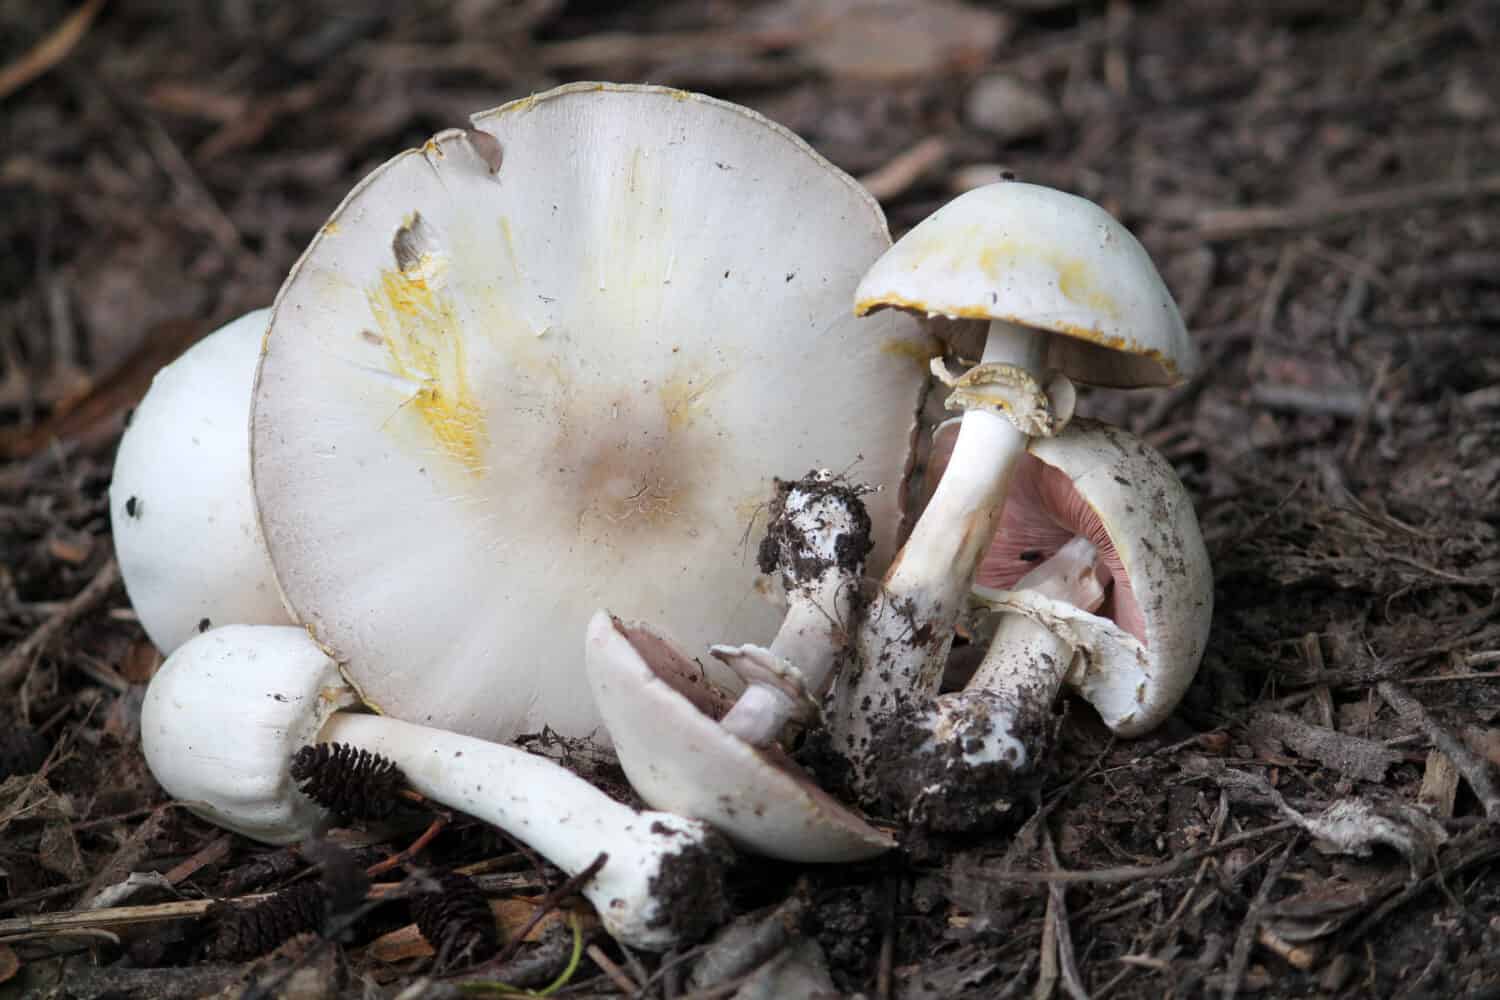 Agaricus xanthodermus or Yellow-staining mushroom. July, Belarus